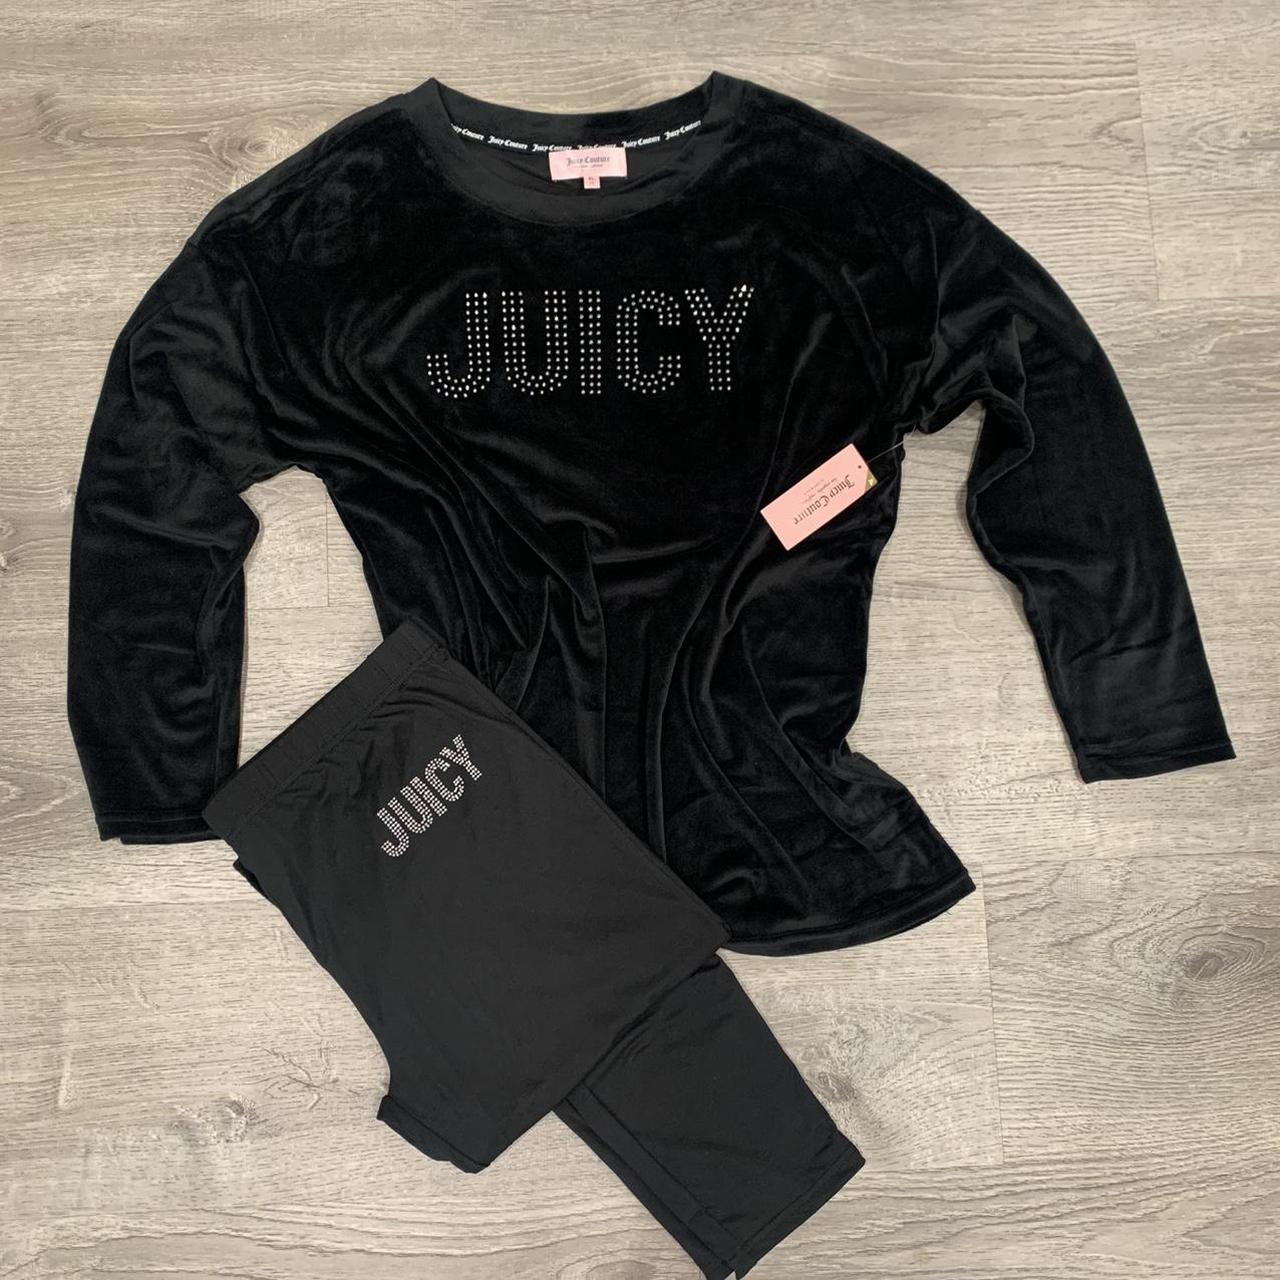 NWT Juicy Couture Black Rhinestone Embellished